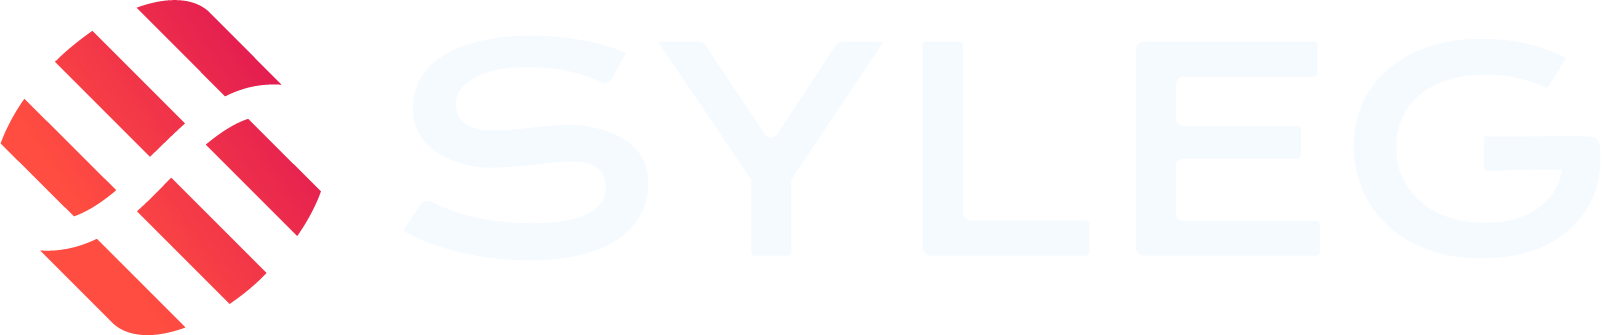 Logo Syleg blanc